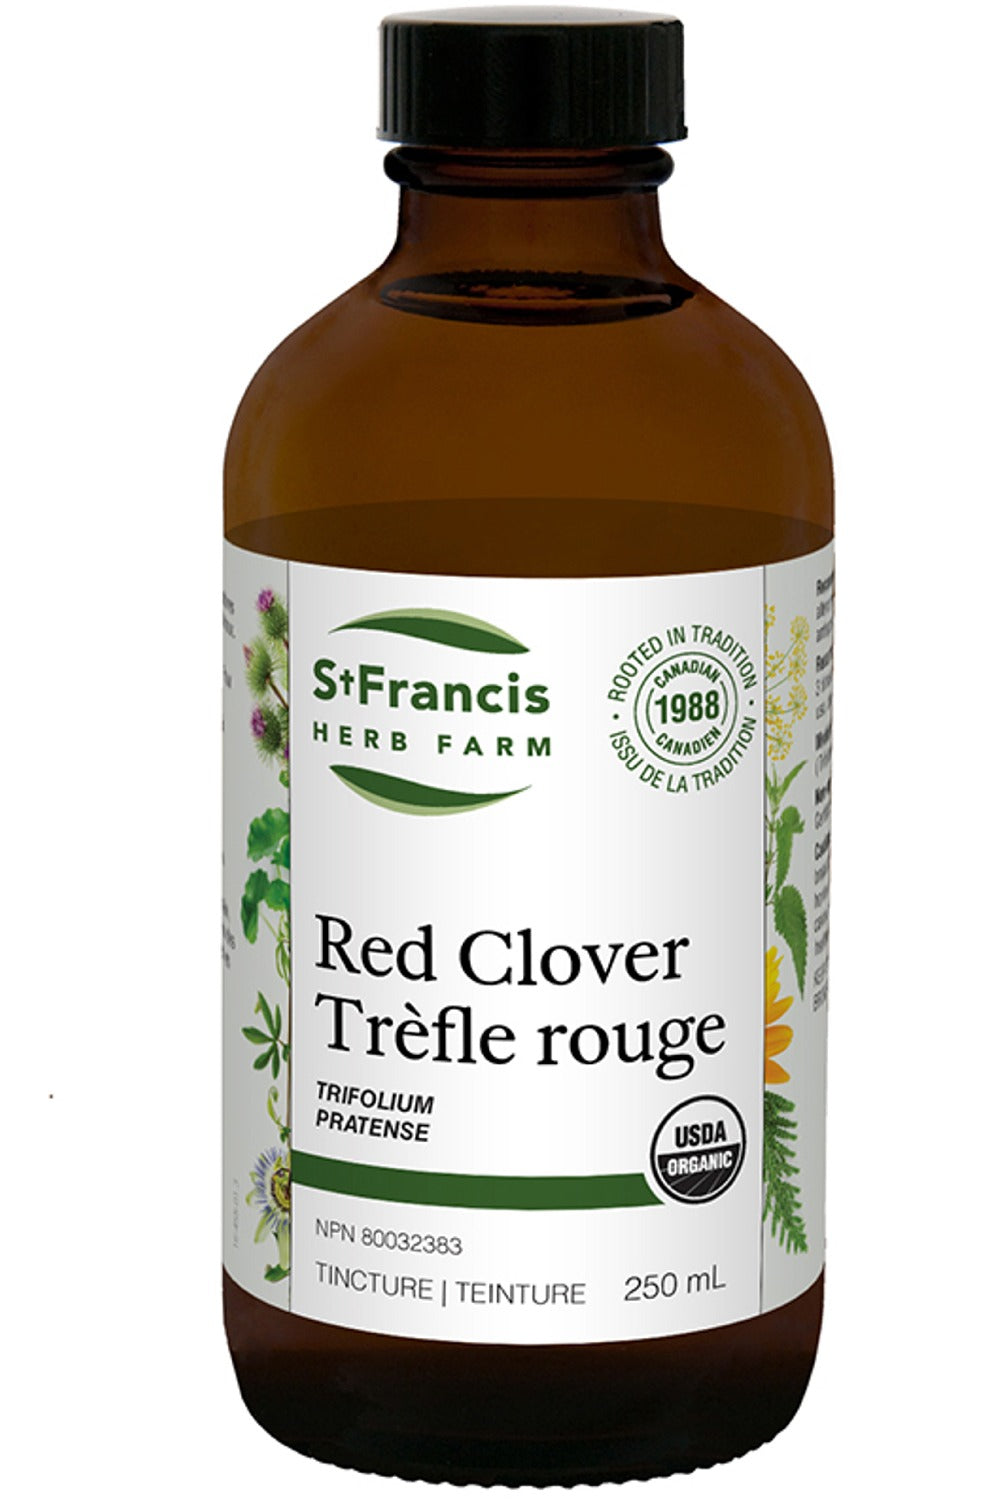 ST FRANCIS HERB FARM Red Clover (250 ml)